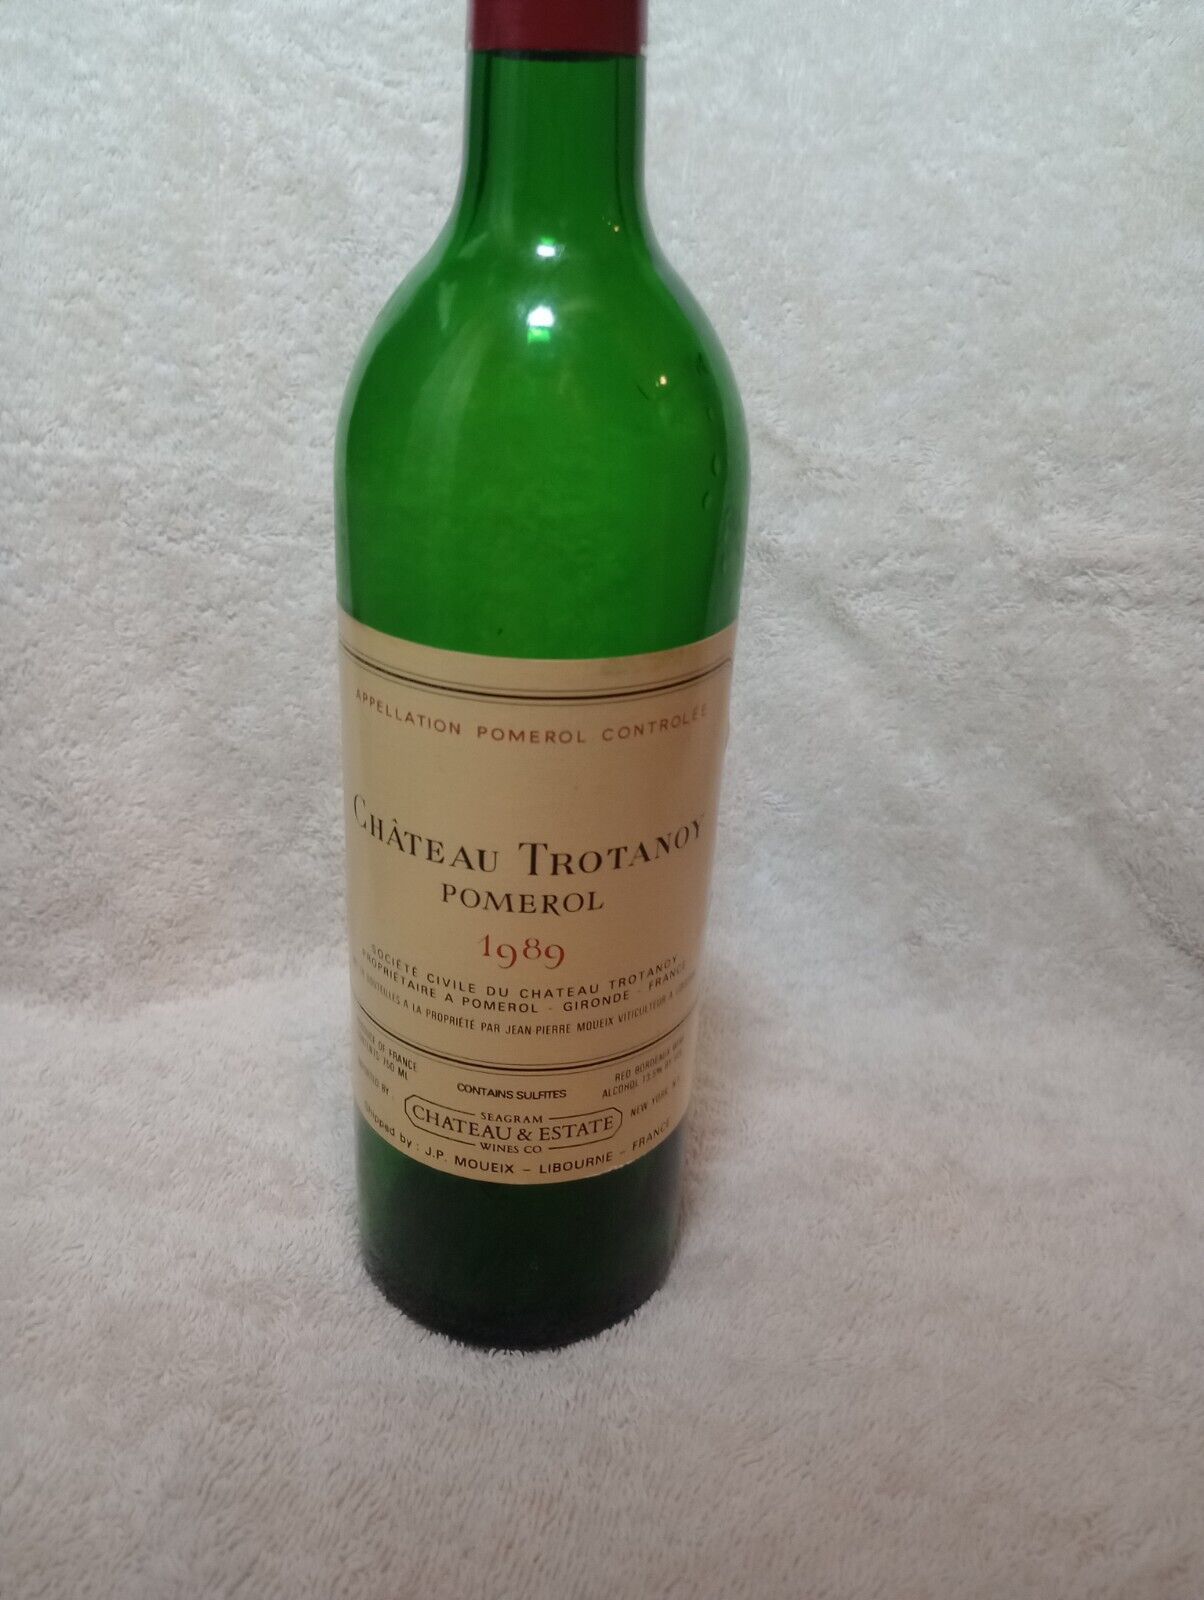 Empty 1989 Cheateau Trotanoy Pomerol Bottle